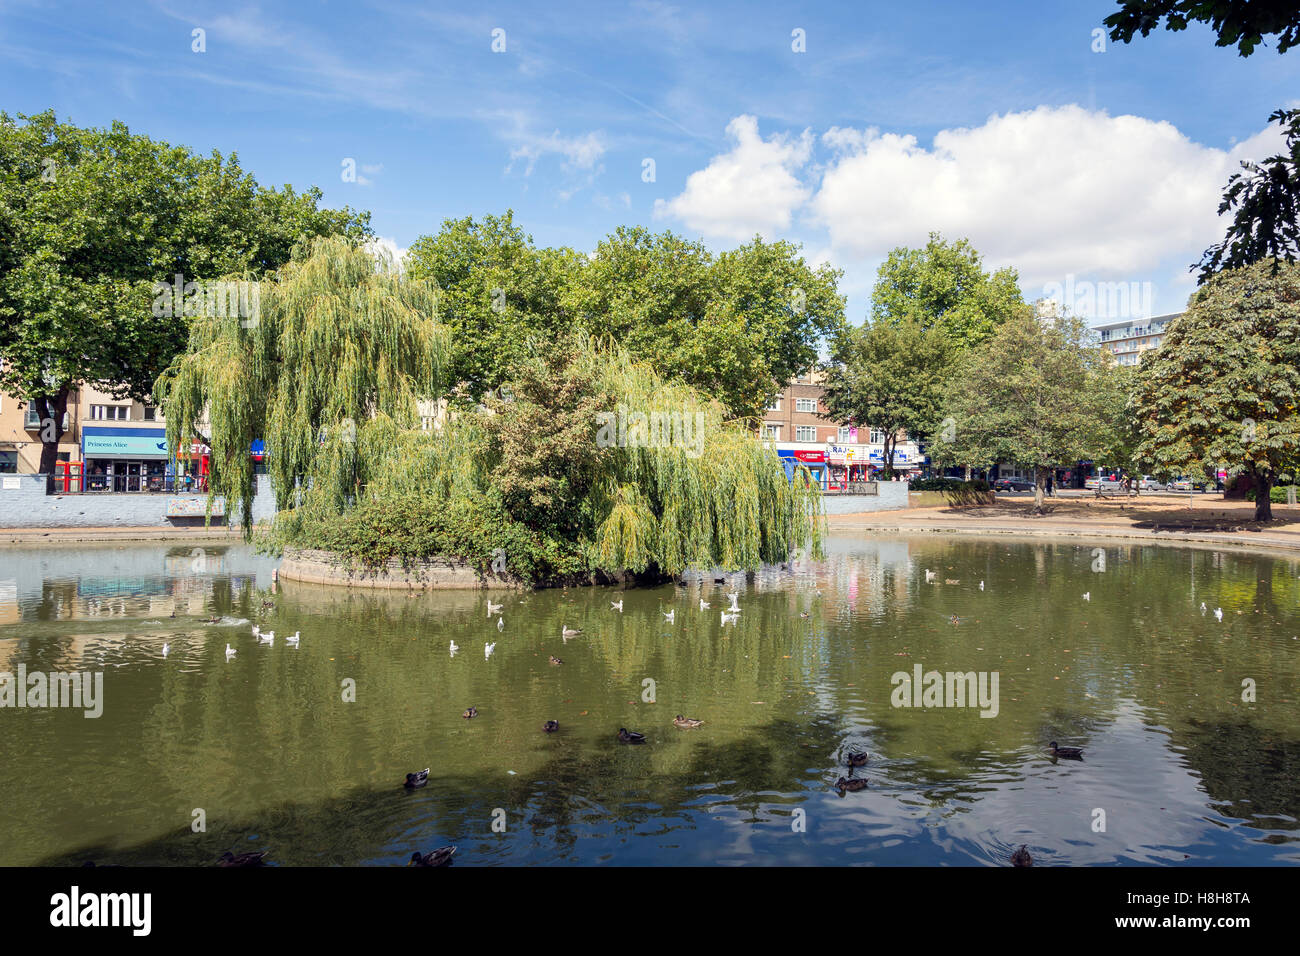 Pond on The Green, High Street, Feltham, London Borough of Hounslow, Greater London, England, United Kingdom Stock Photo